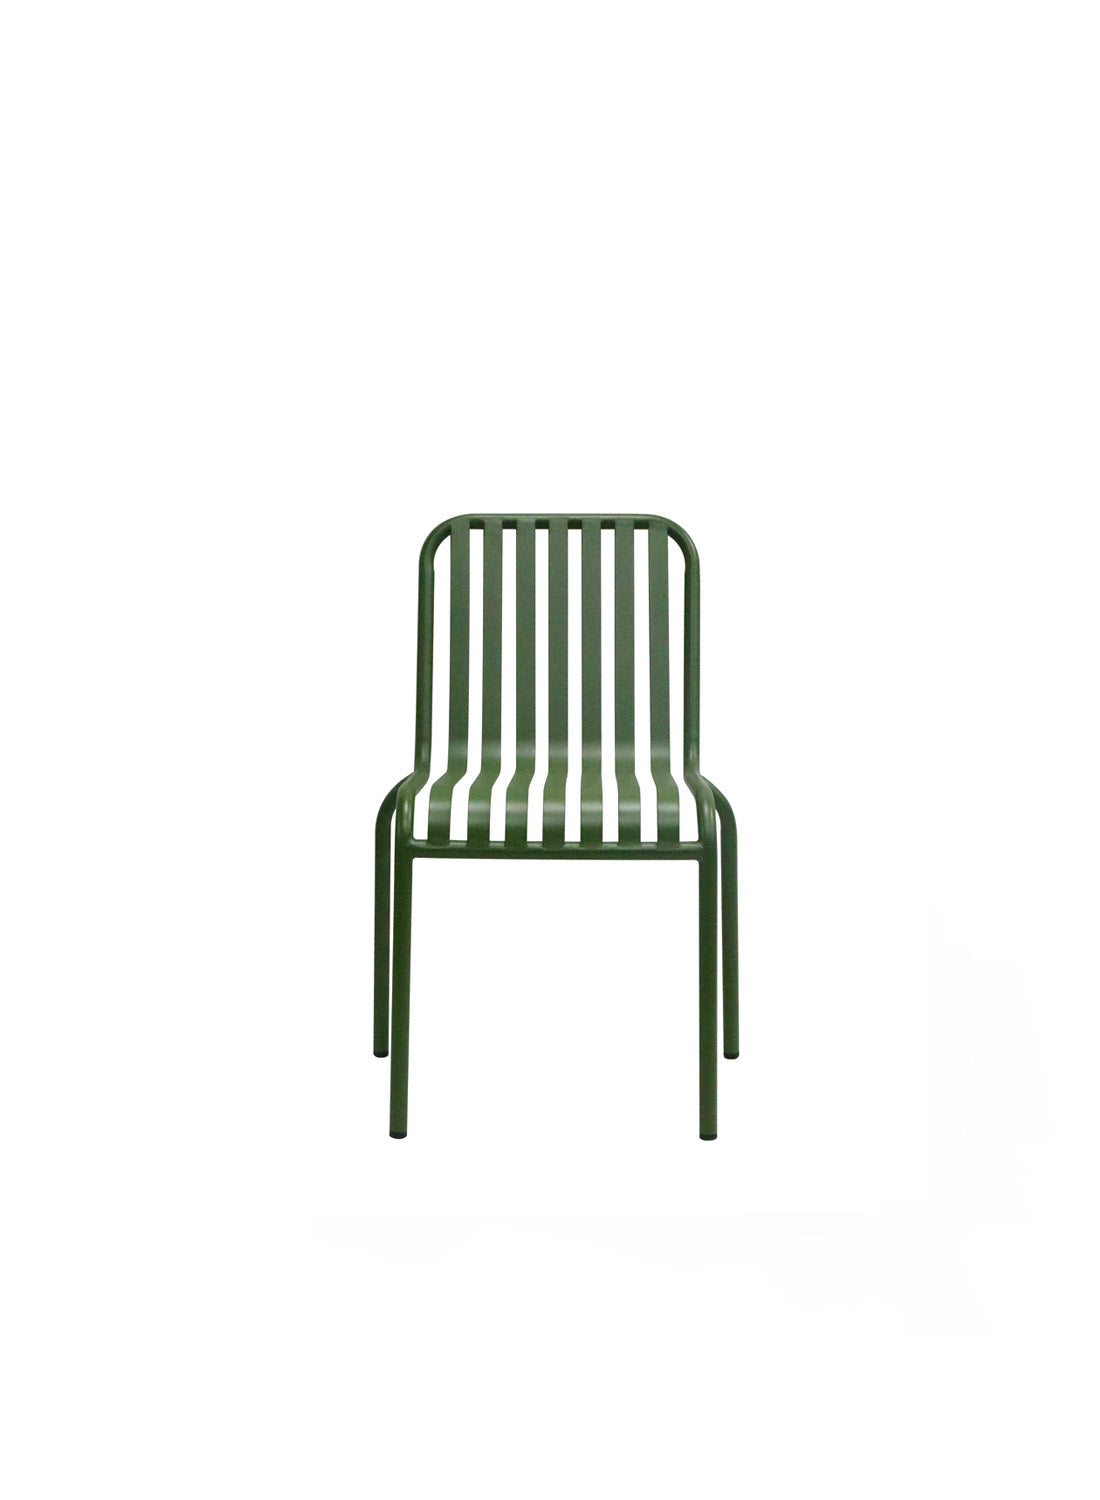 Elara Outdoor Chair, dark green (set of 2)